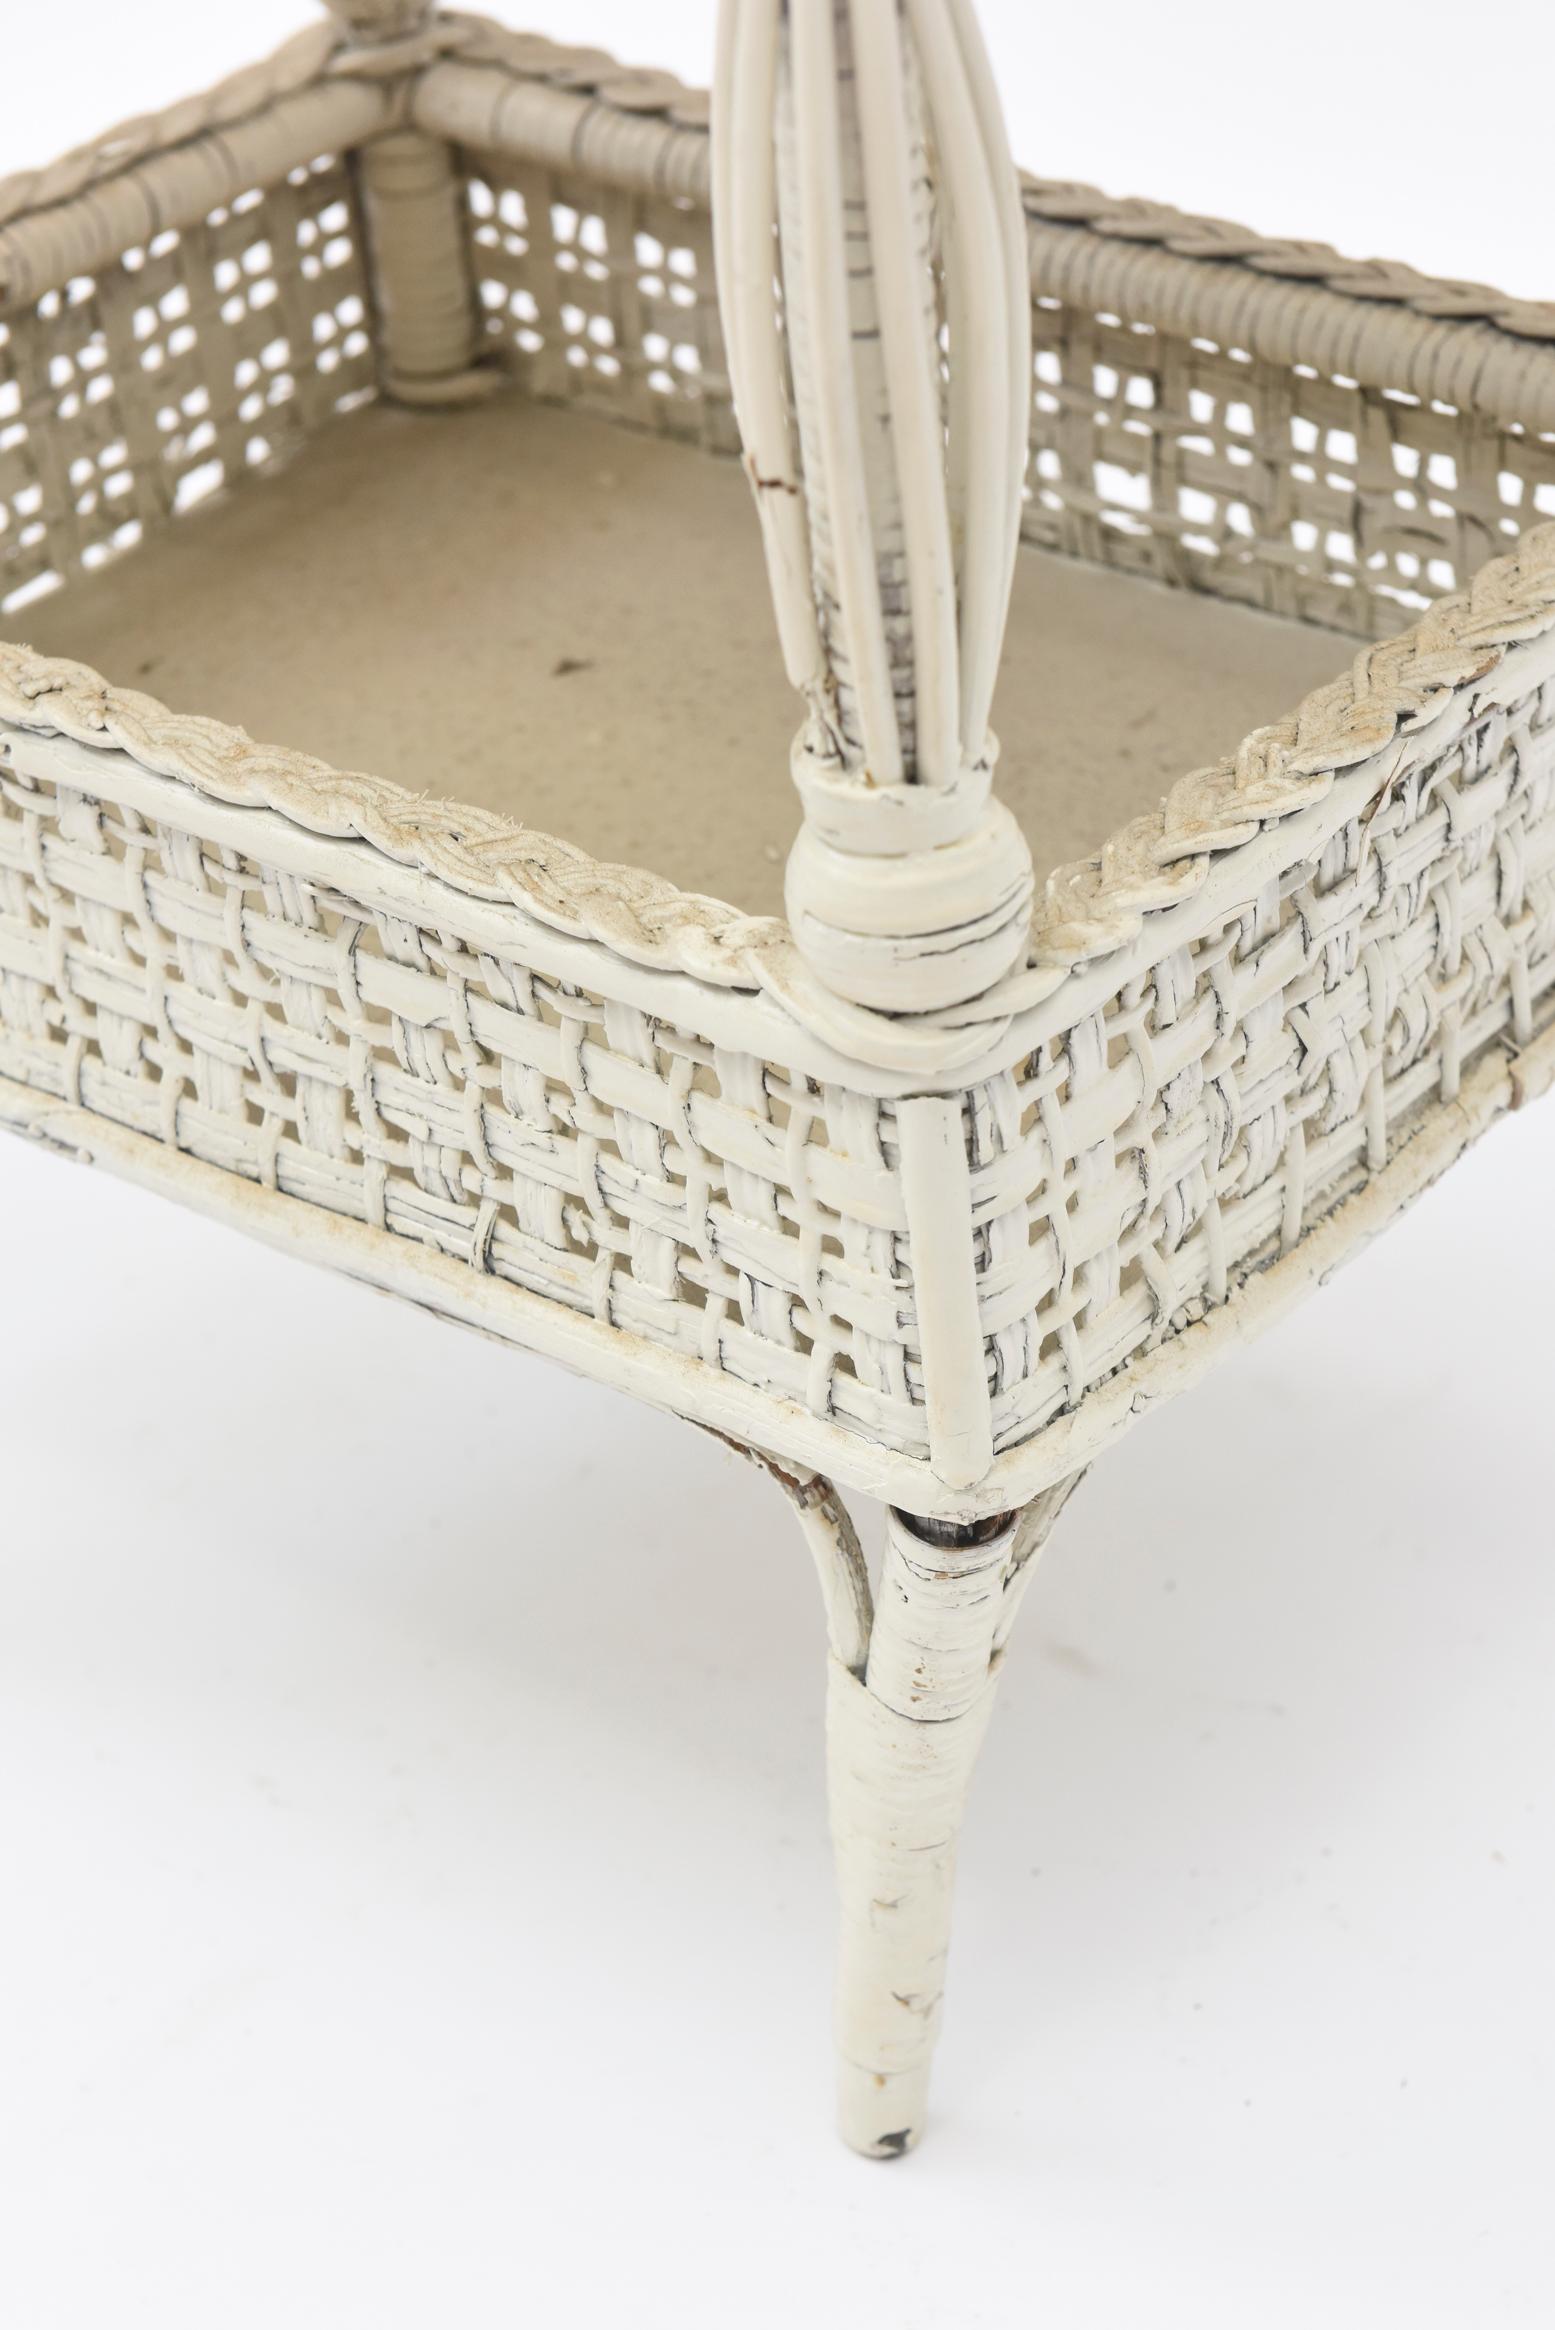 wicker sewing basket with legs